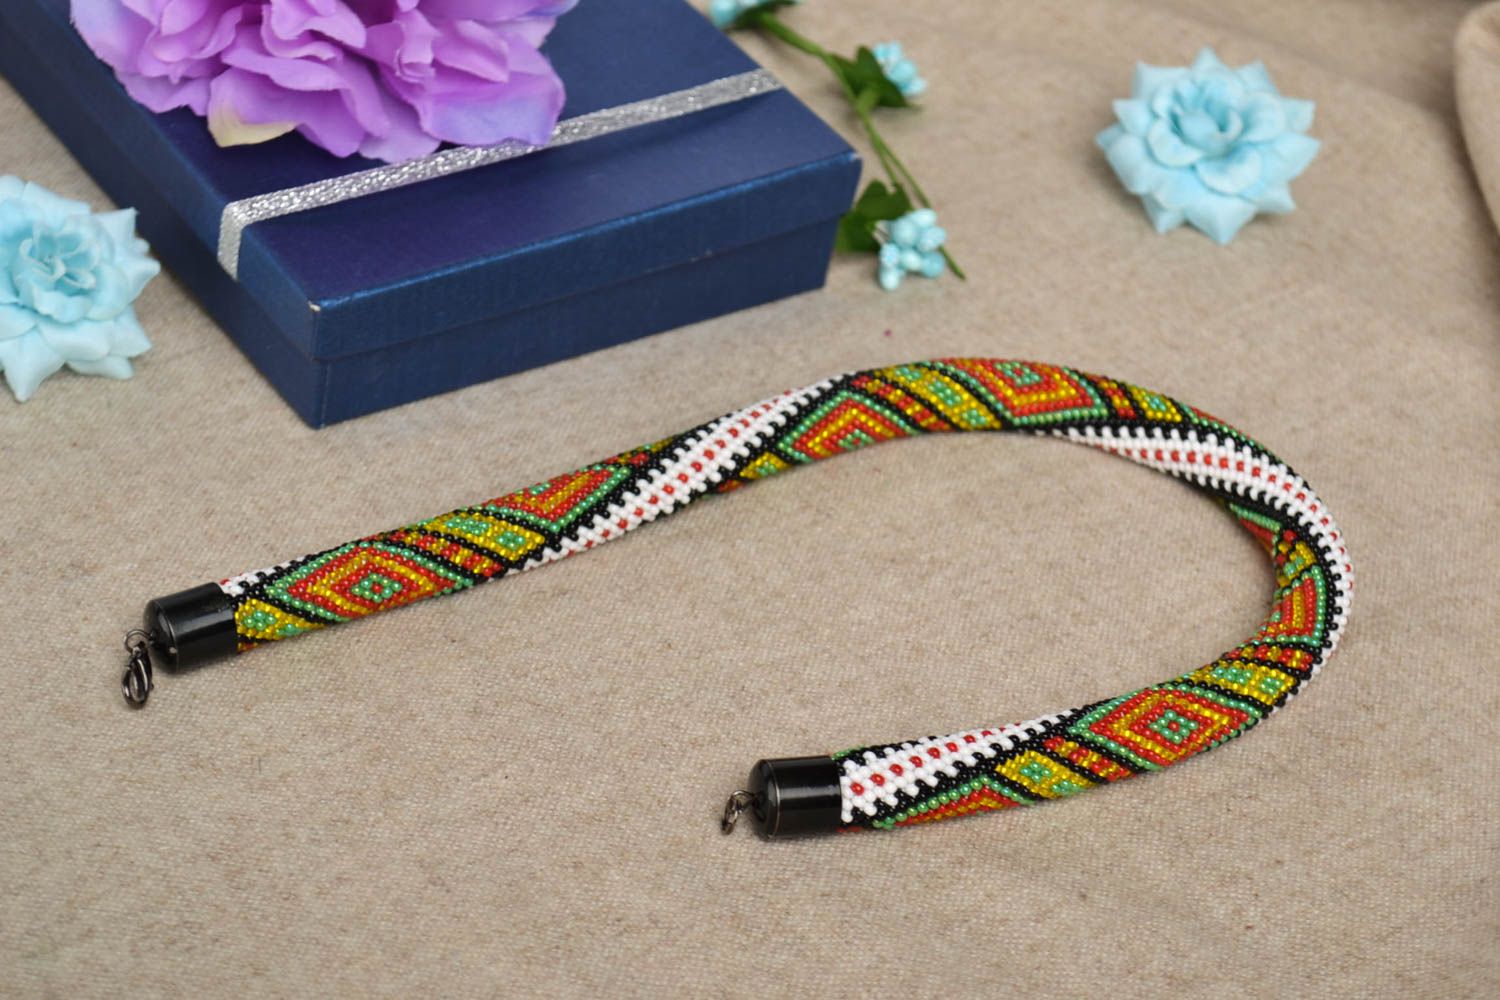 Handmade beaded necklace seed beads jewelry handmade accessories for women photo 1